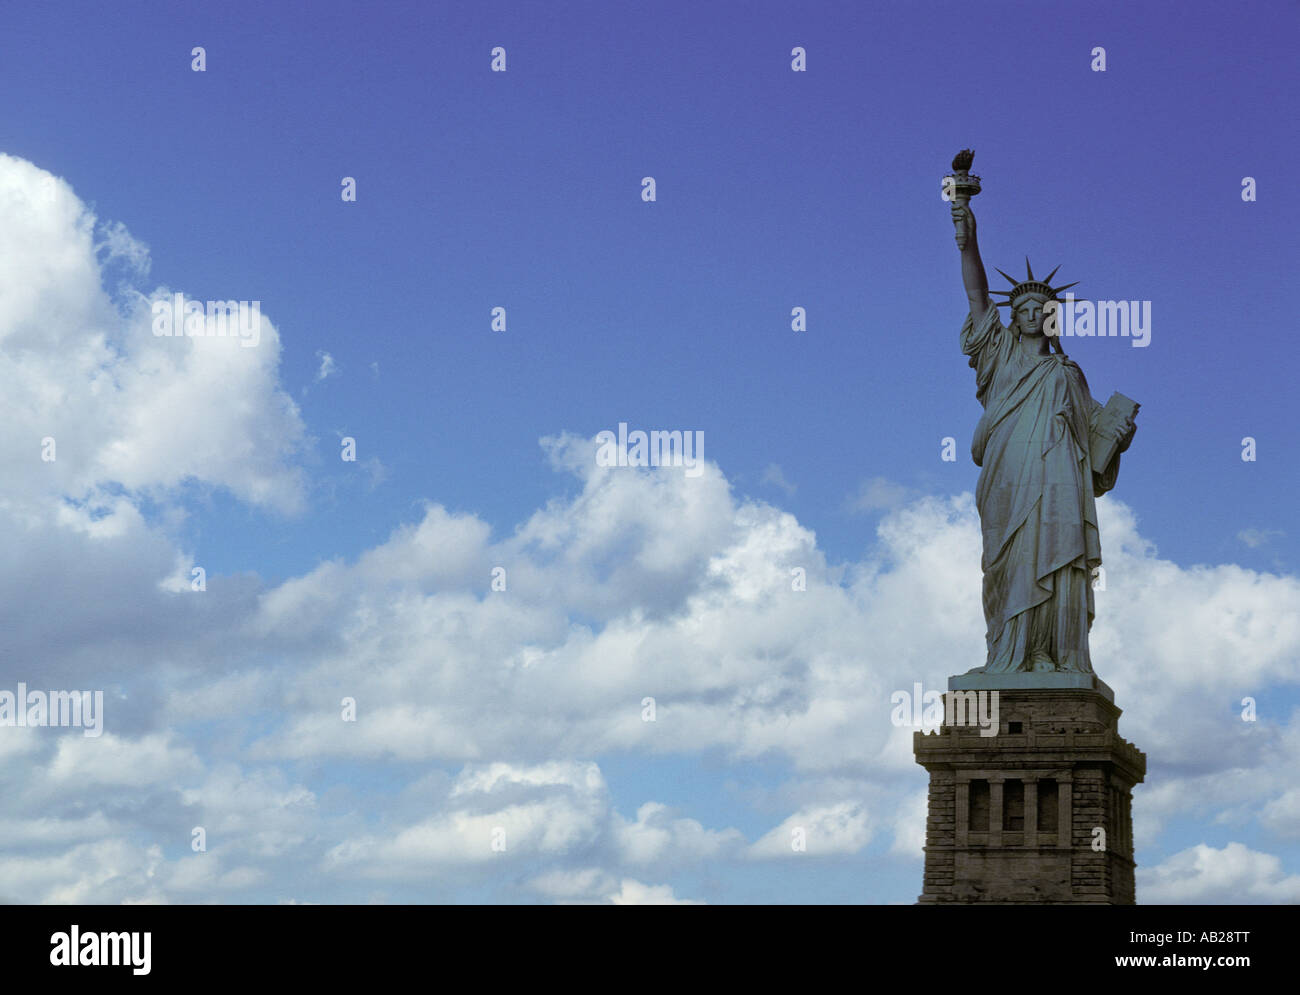 NYC Statue of Liberty New York Harbor New York city USA America Americana bright white fluffy clouds Stock Photo